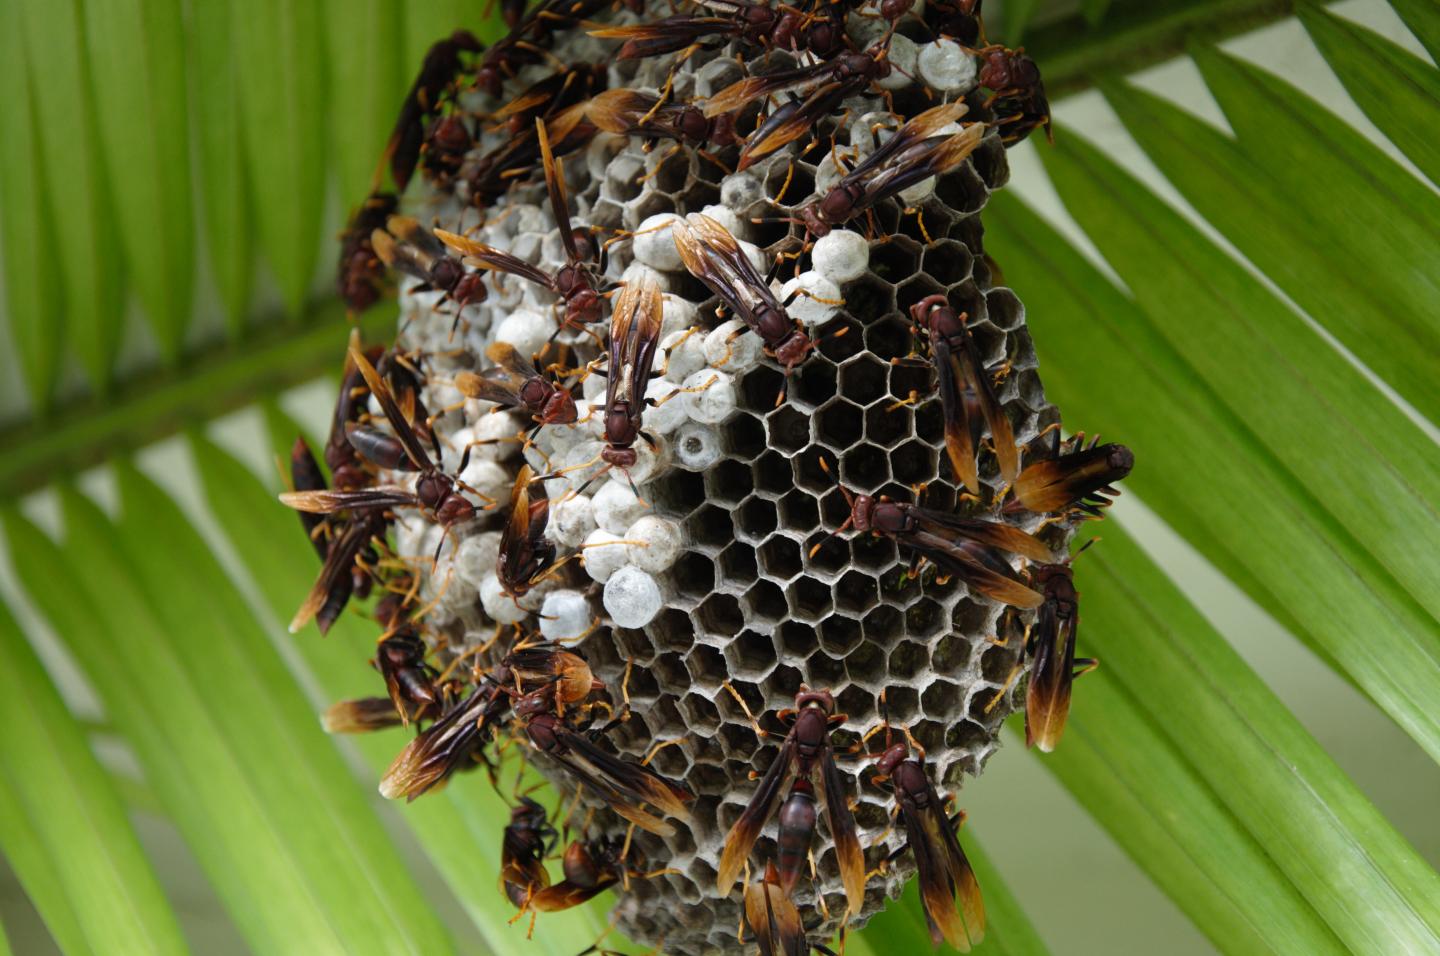 A Polistes Wasp Colony in Panama